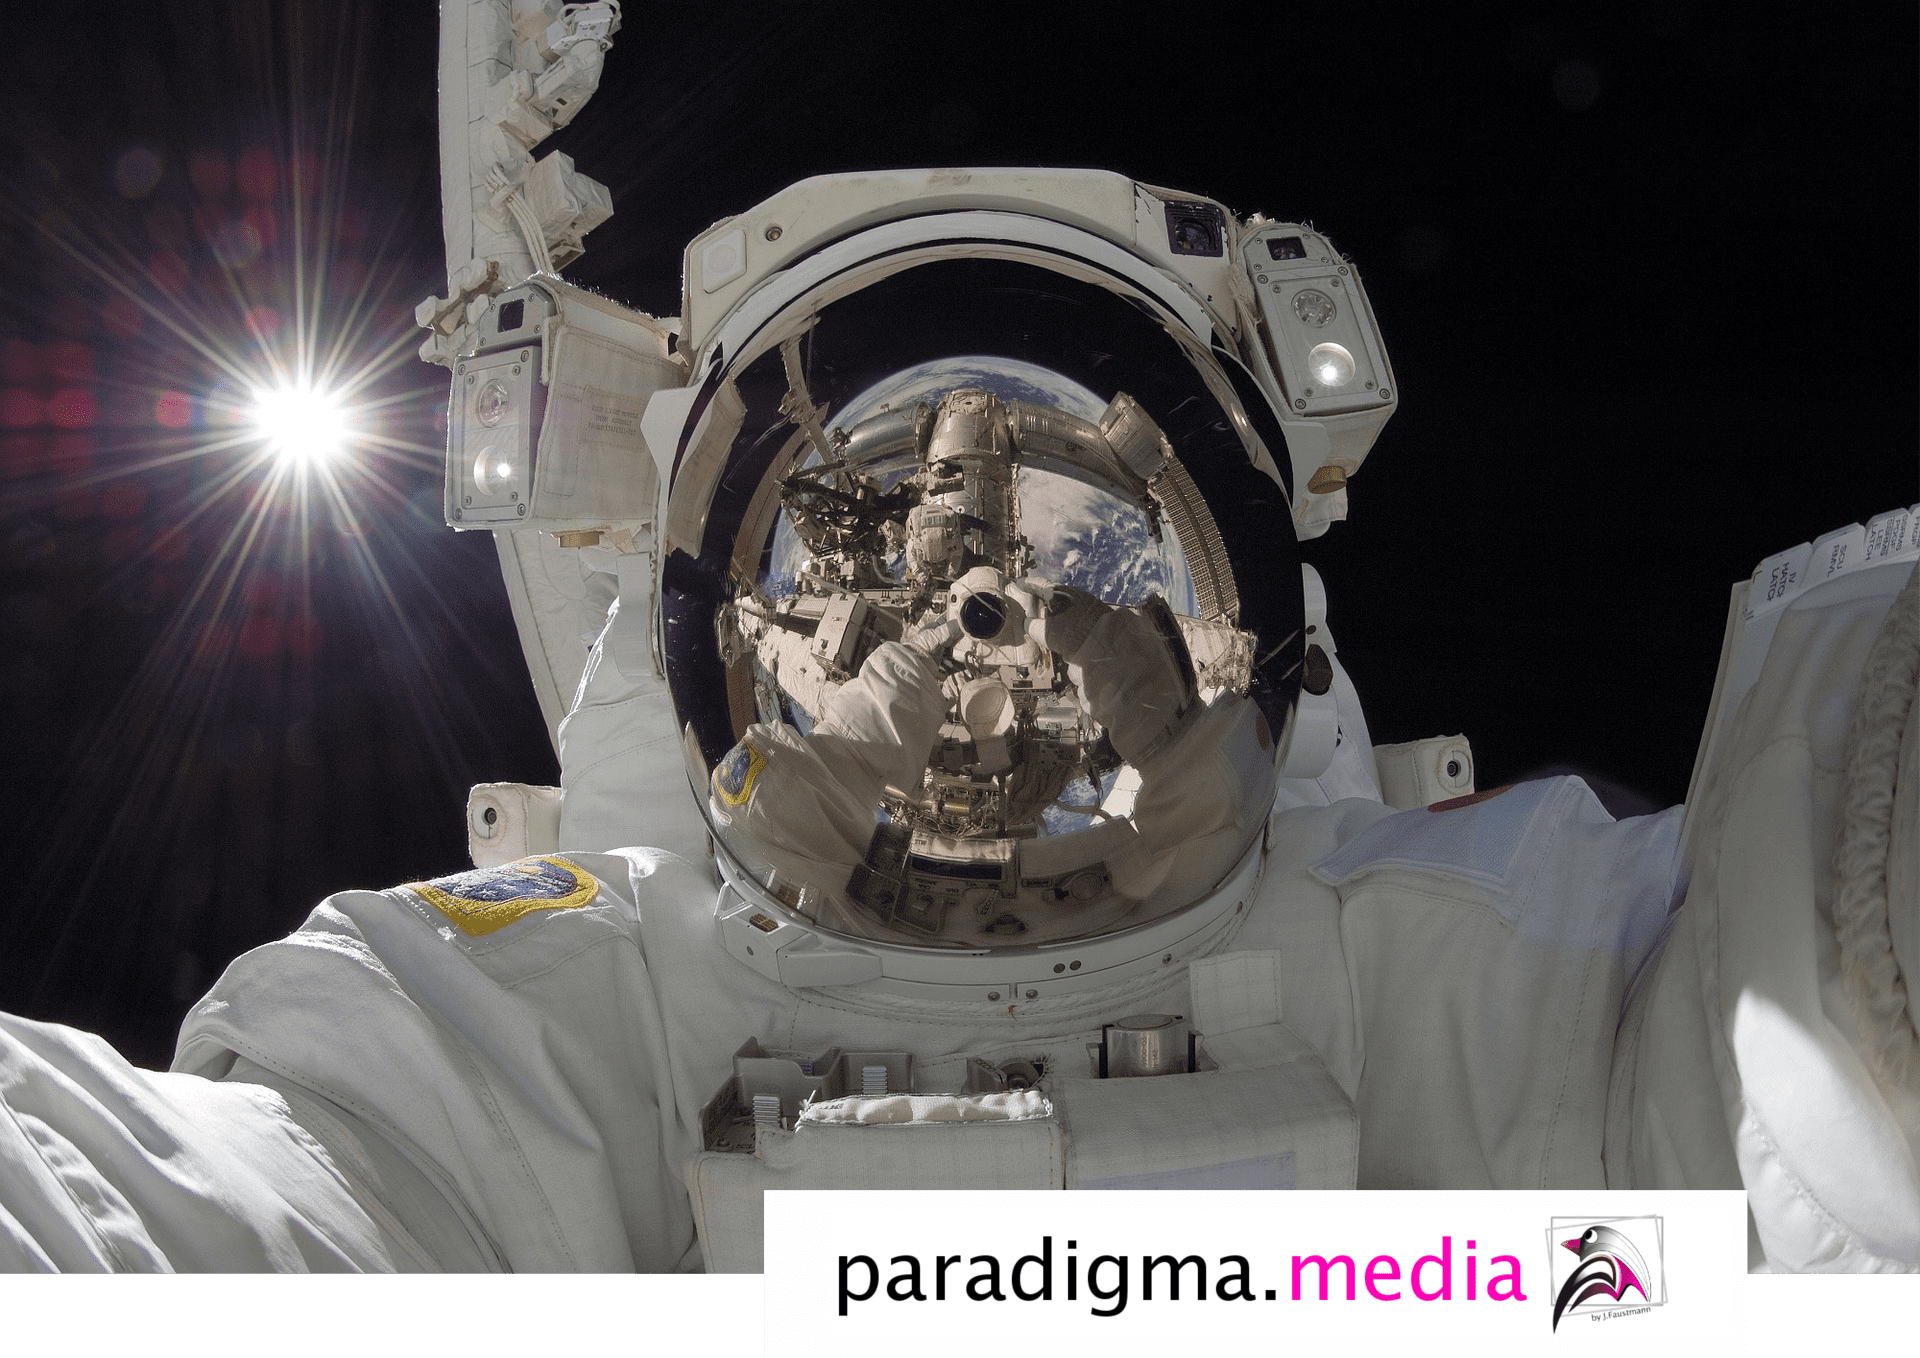 Paradigma.media werbung Berlin Astronaut Atronaut Spiegelschutzfole